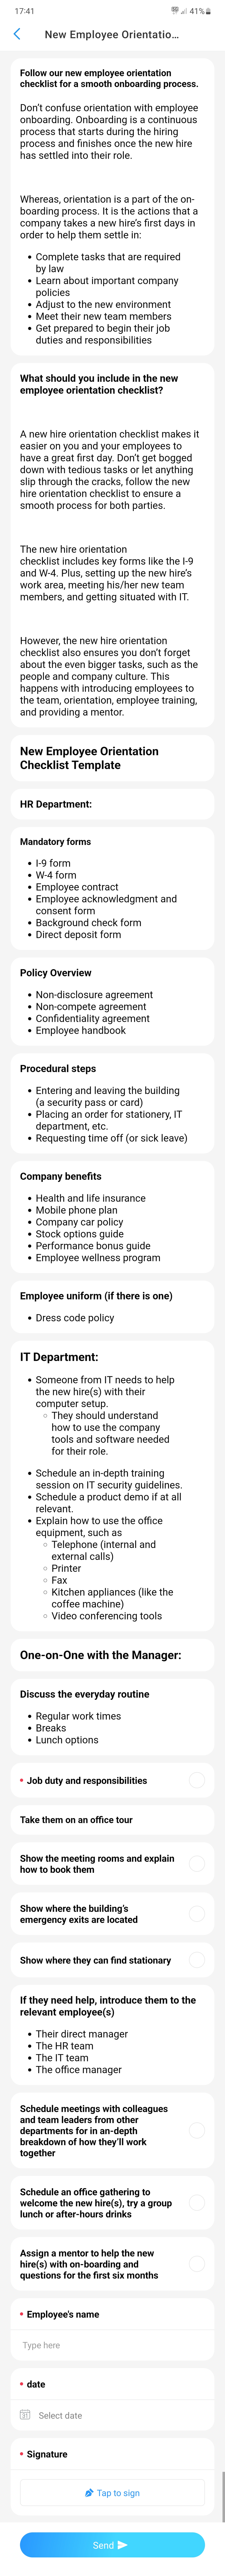 new employee orientation program checklist-mobile-view